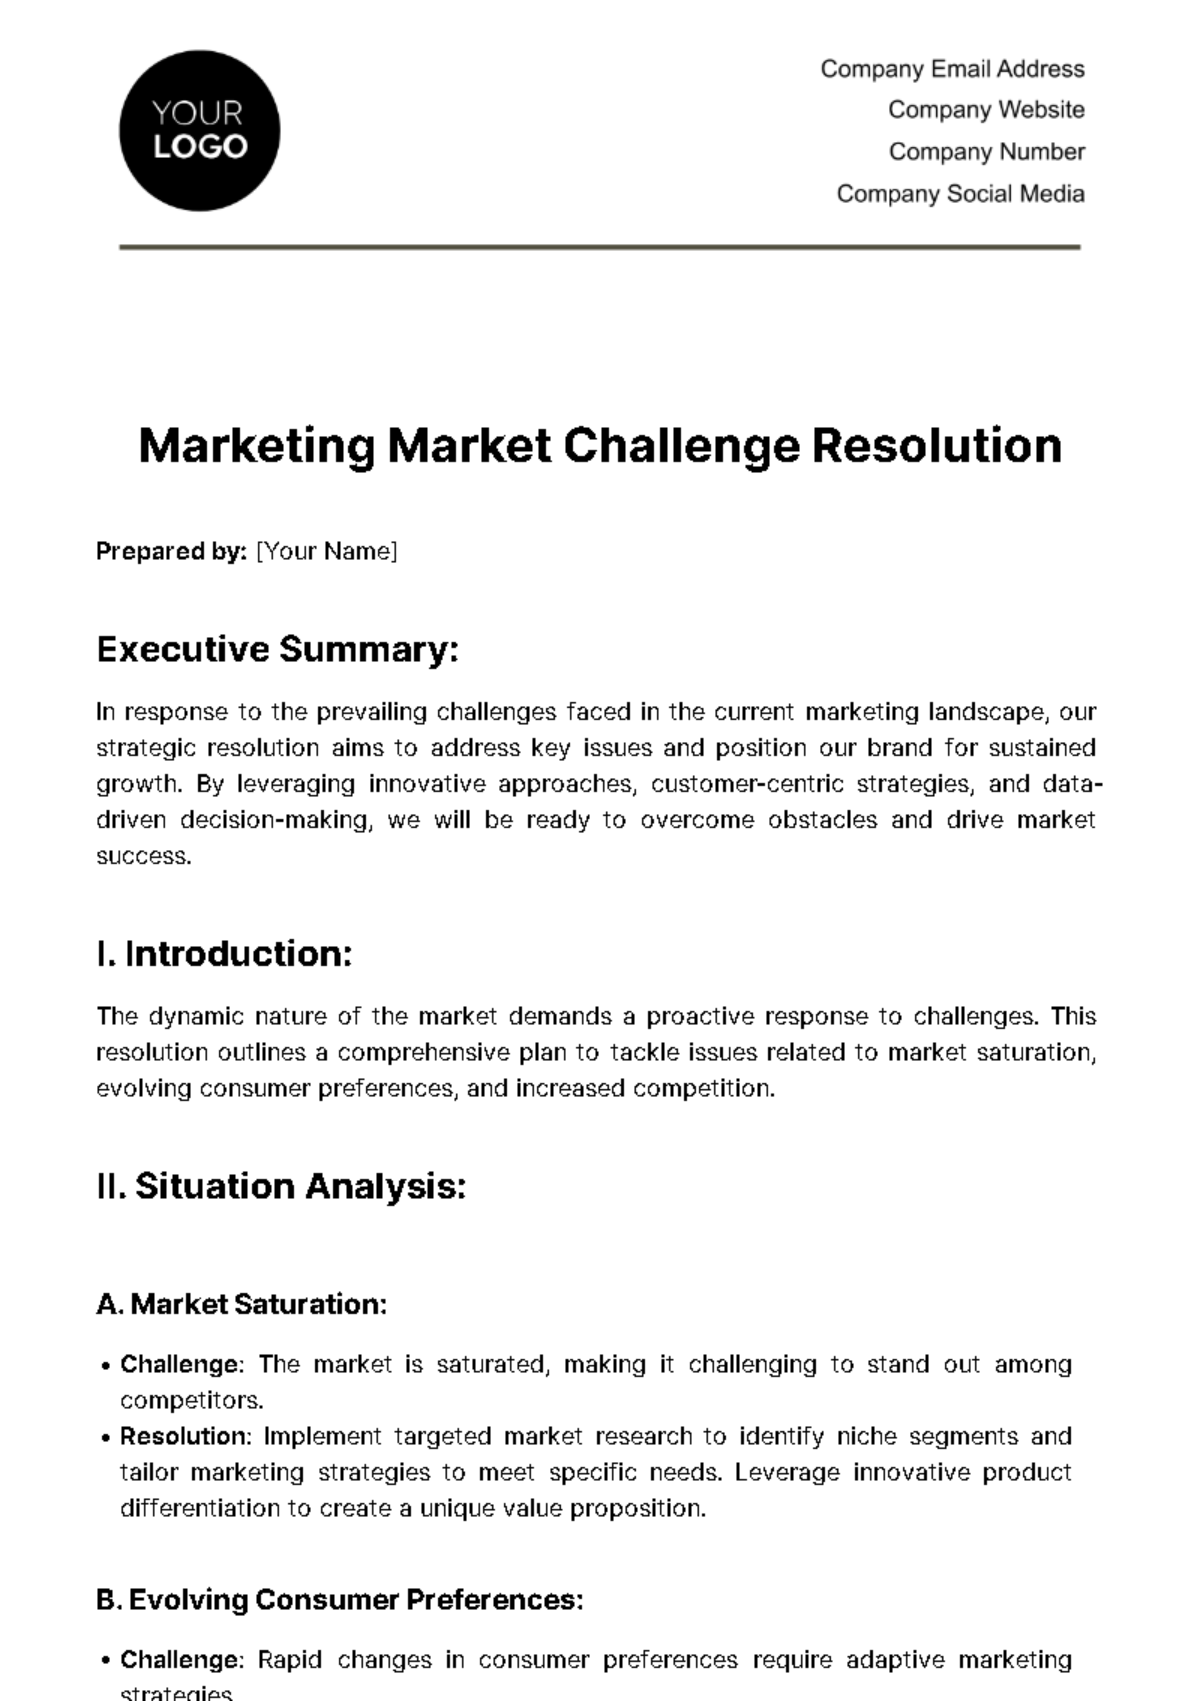 Free Marketing Market Challenge Resolution Template